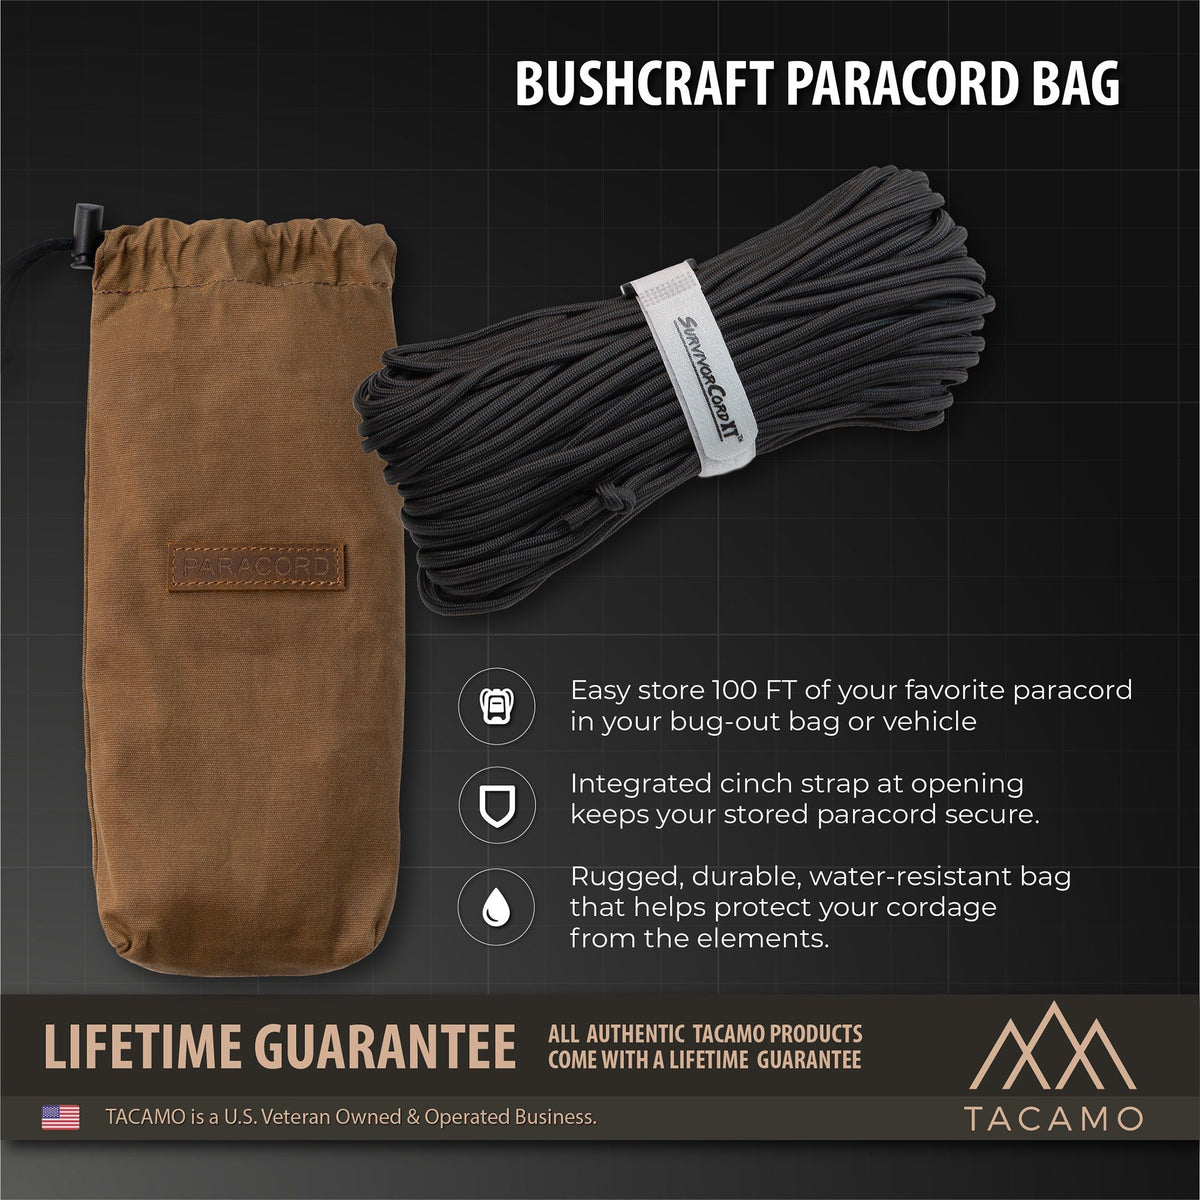 Canvas Bushcraft Bag - Features